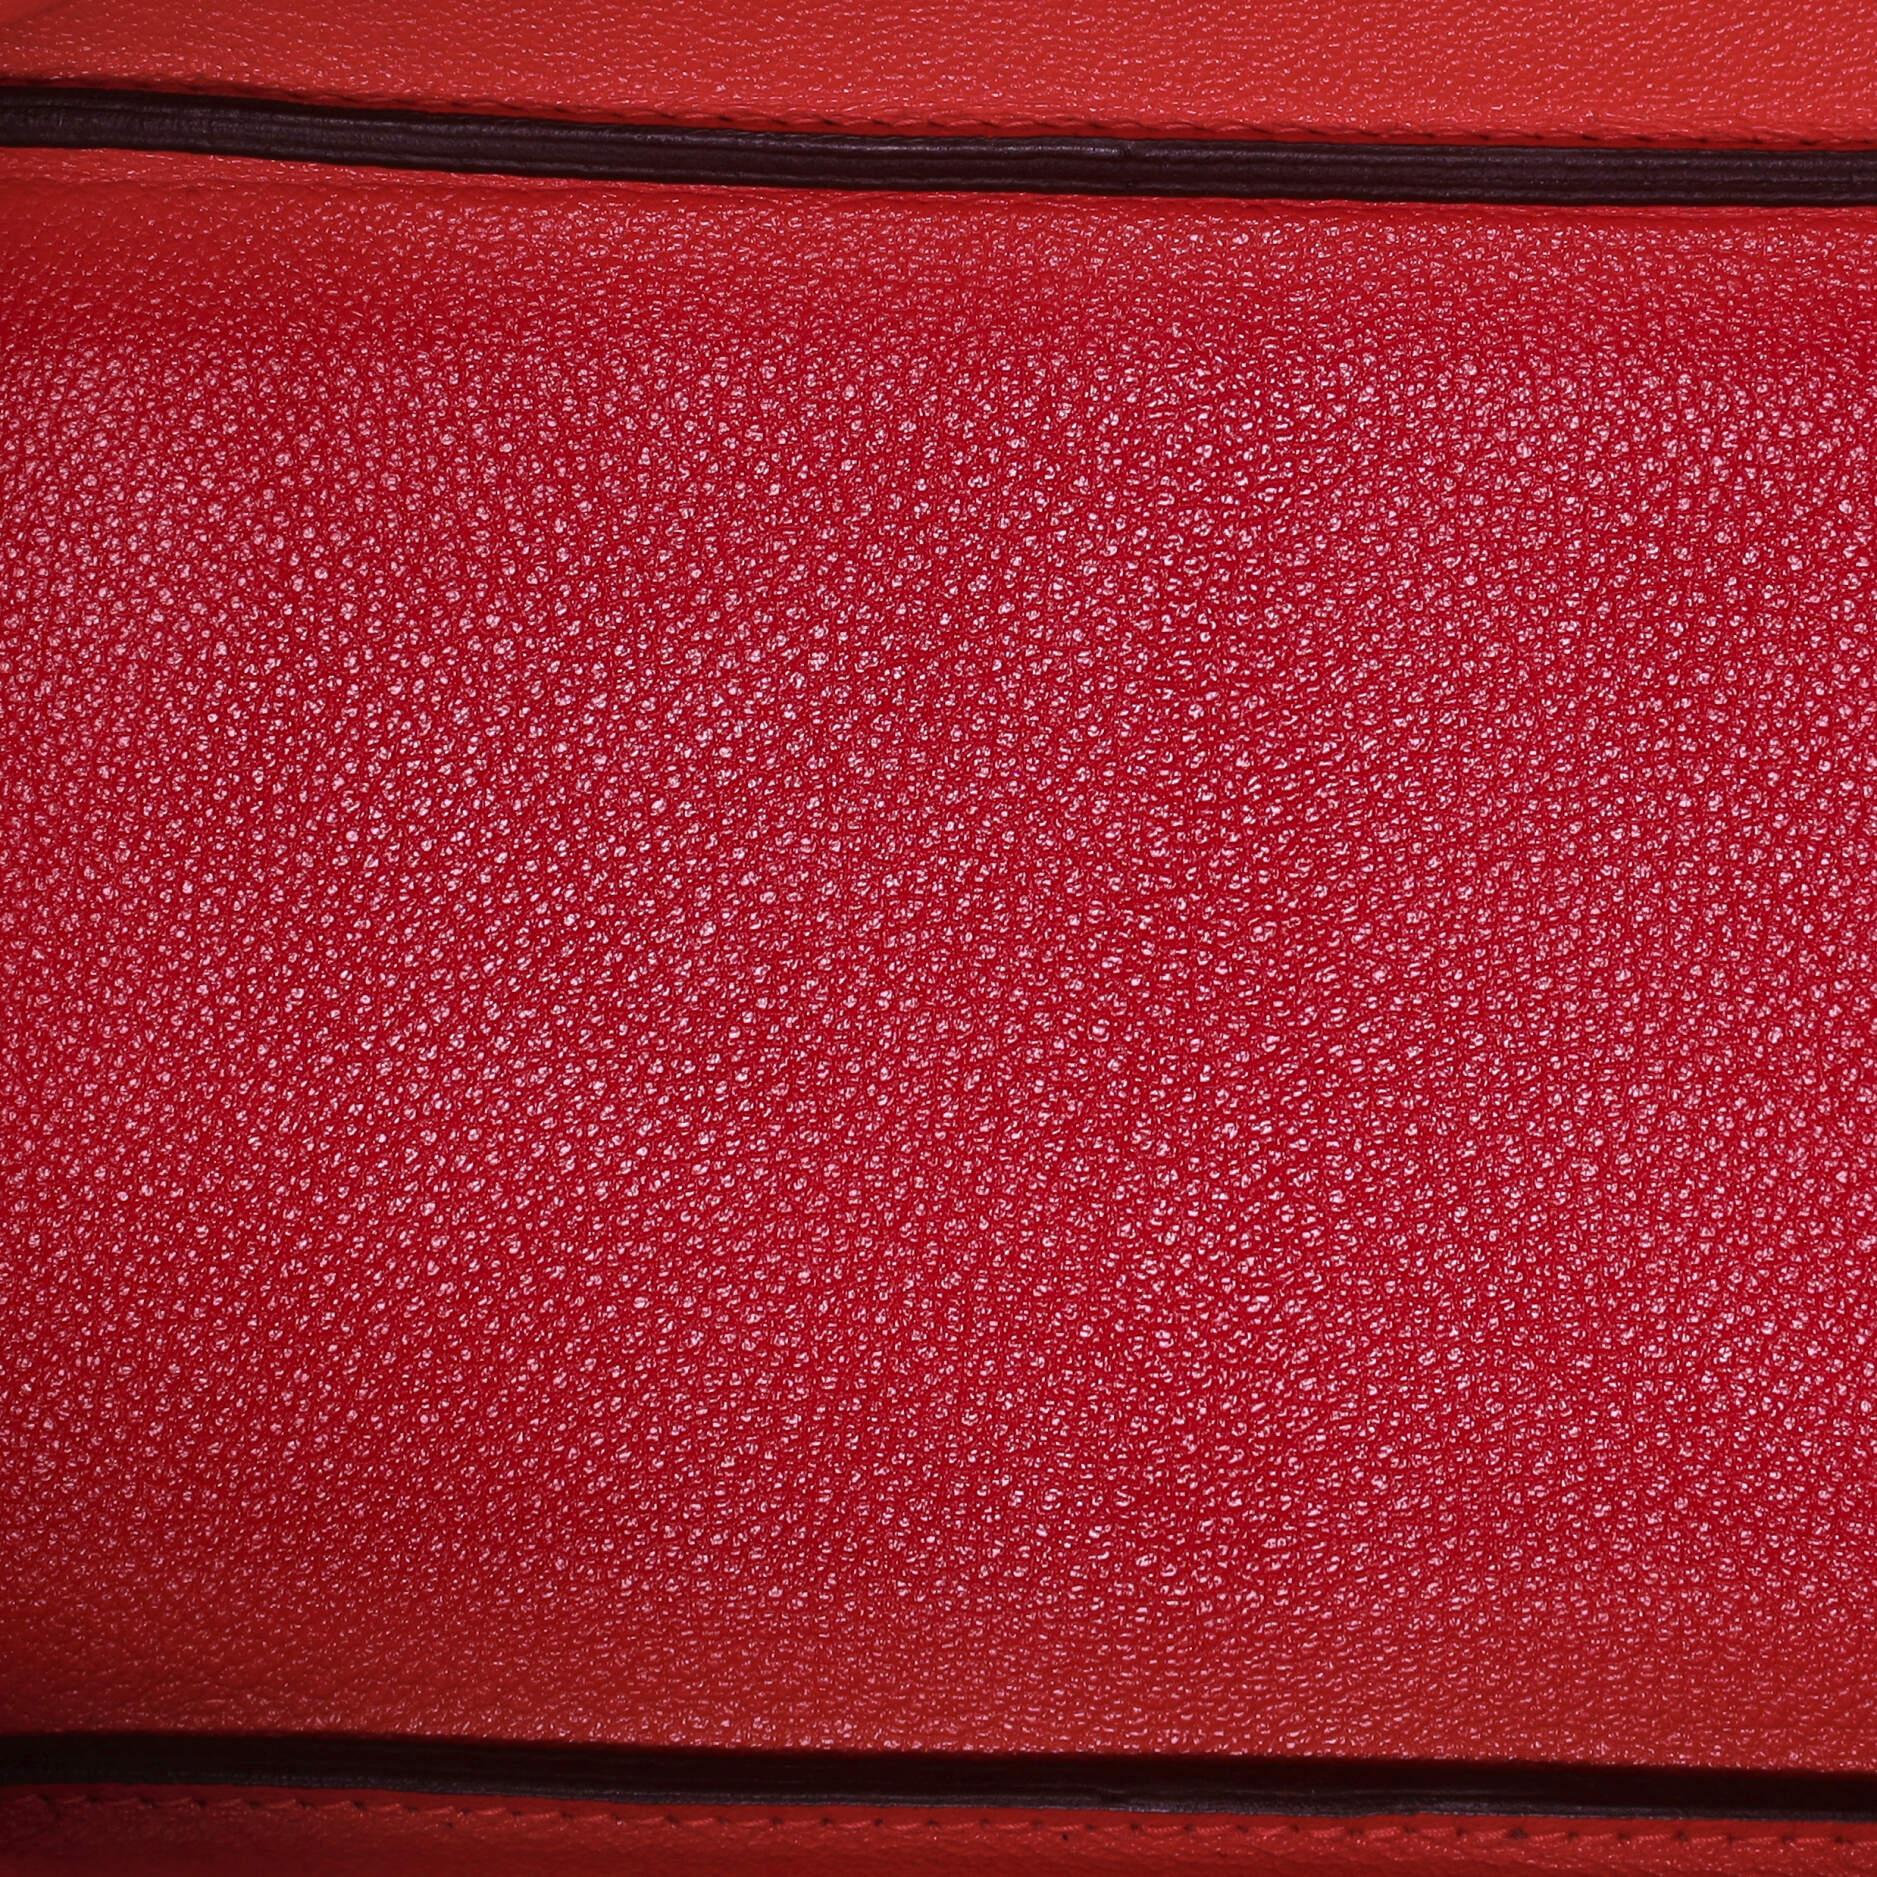 Pink Hermes Birkin Handbag Rose Jaipur Togo With Gold Hardware 30